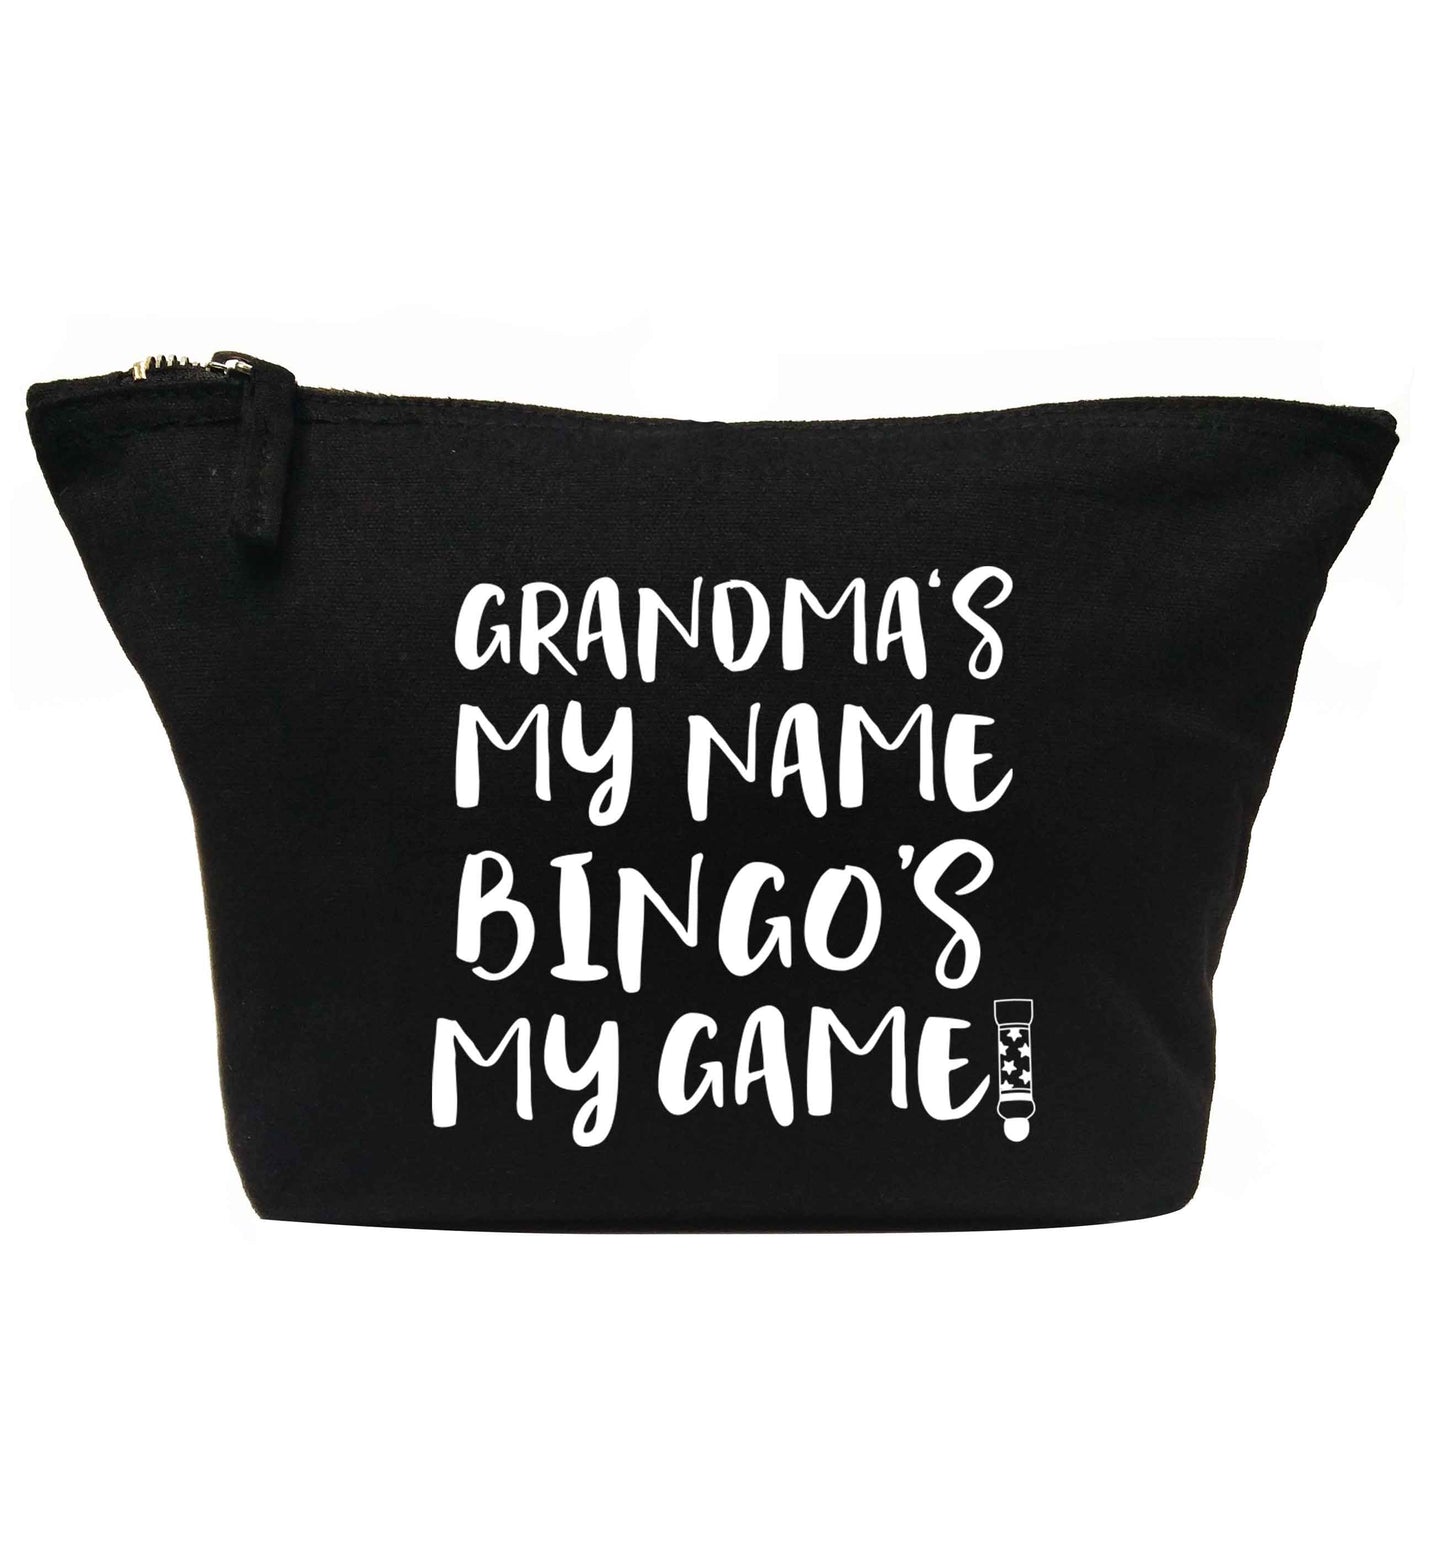 Grandma's my name bingo's my game! | makeup / wash bag